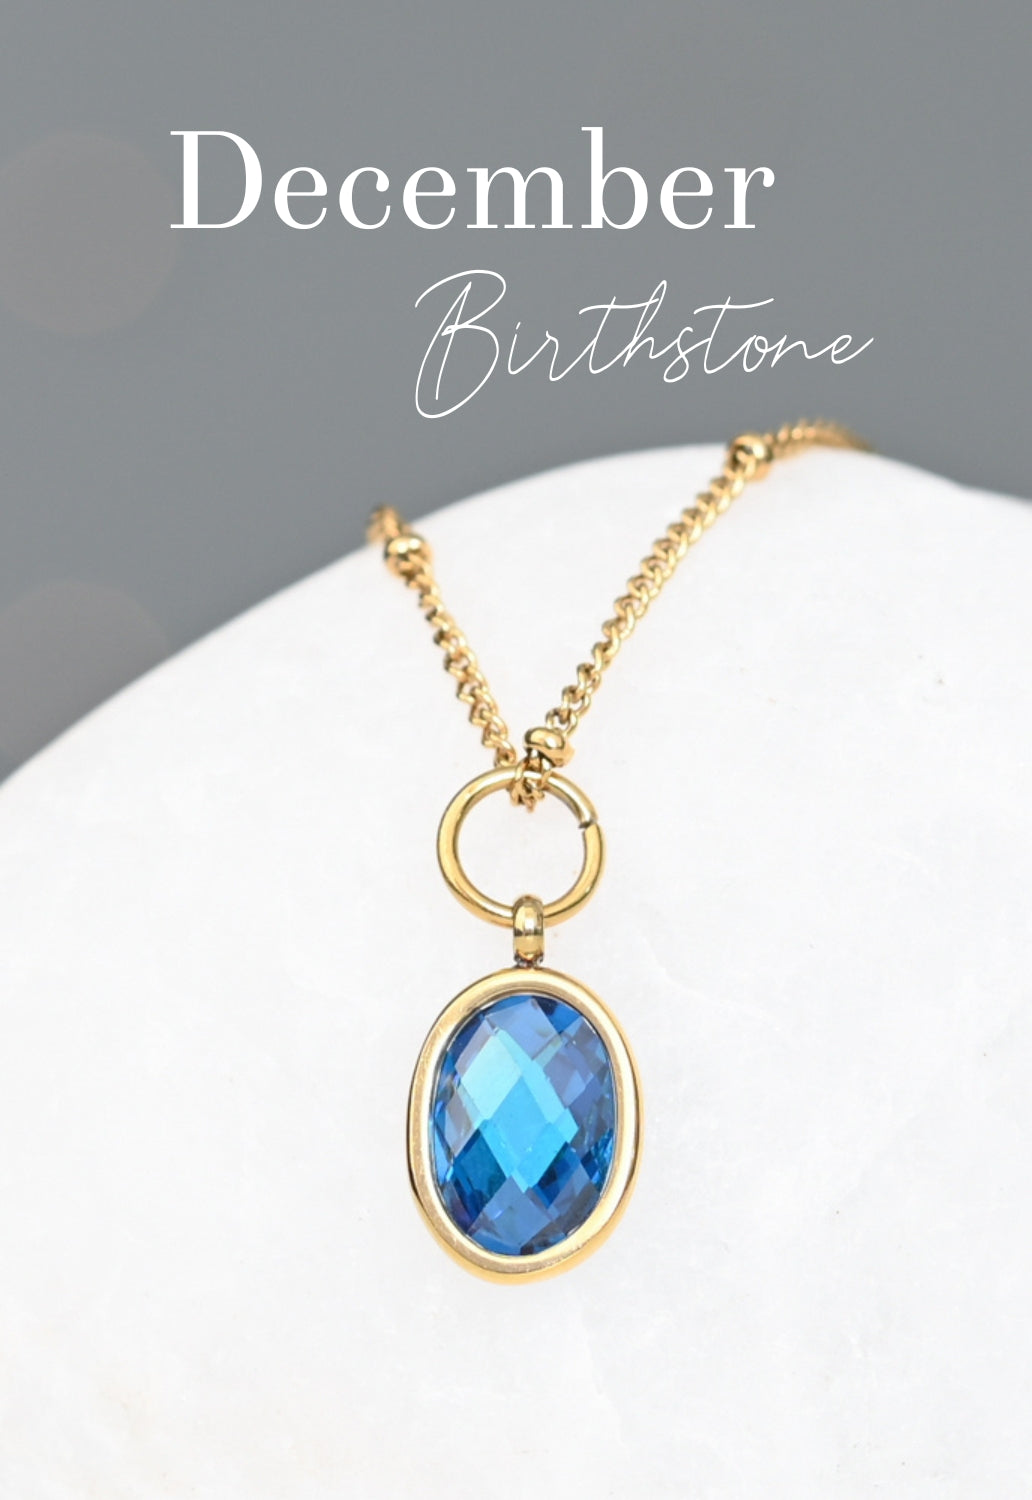 Birthstone Necklace - Three Charms